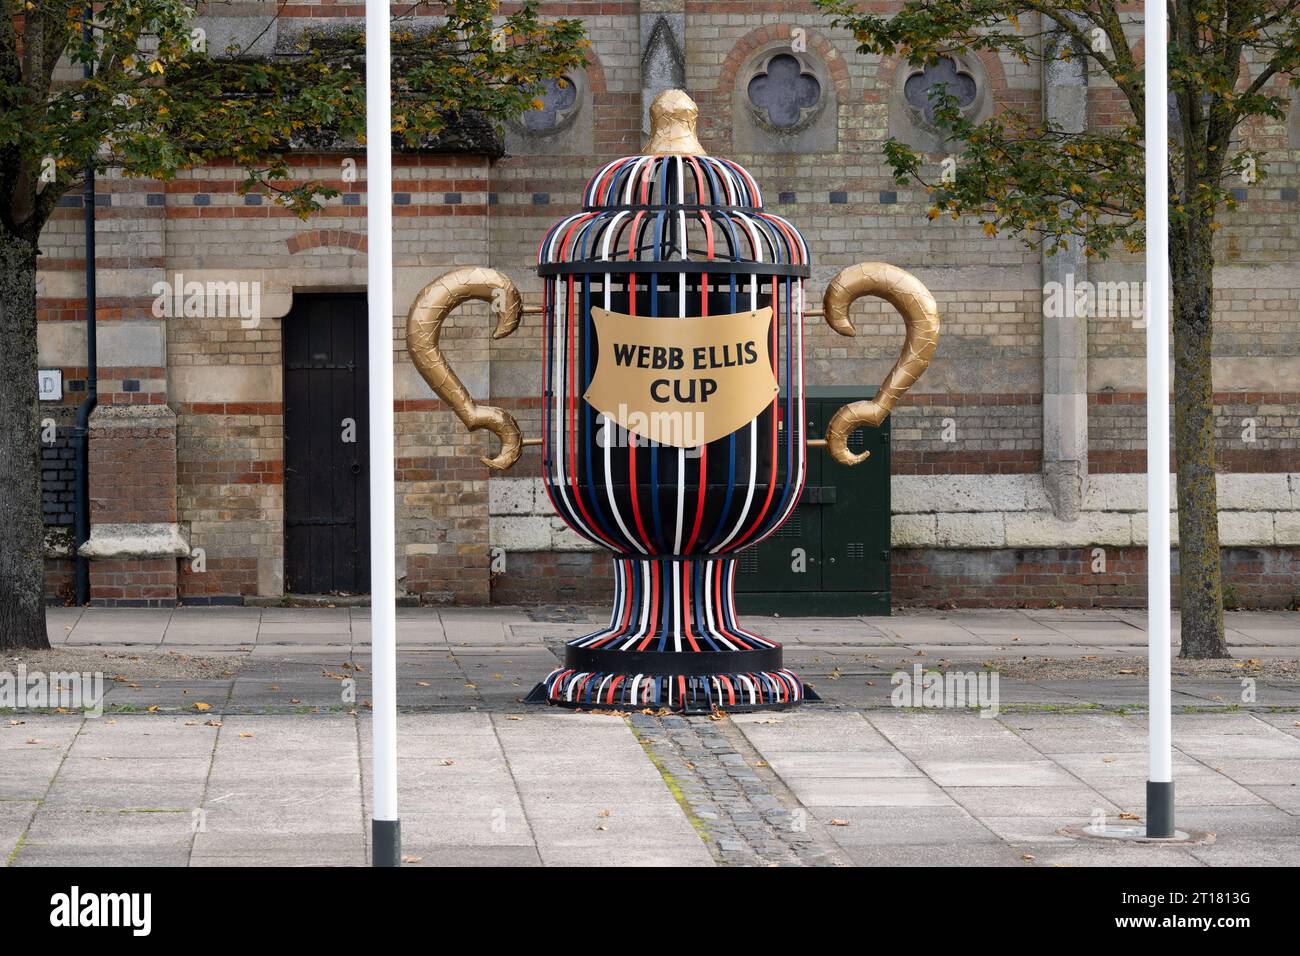 Webb Ellis Cup sculpture, Rugby, Warwickshire, England, UK Stock Photo